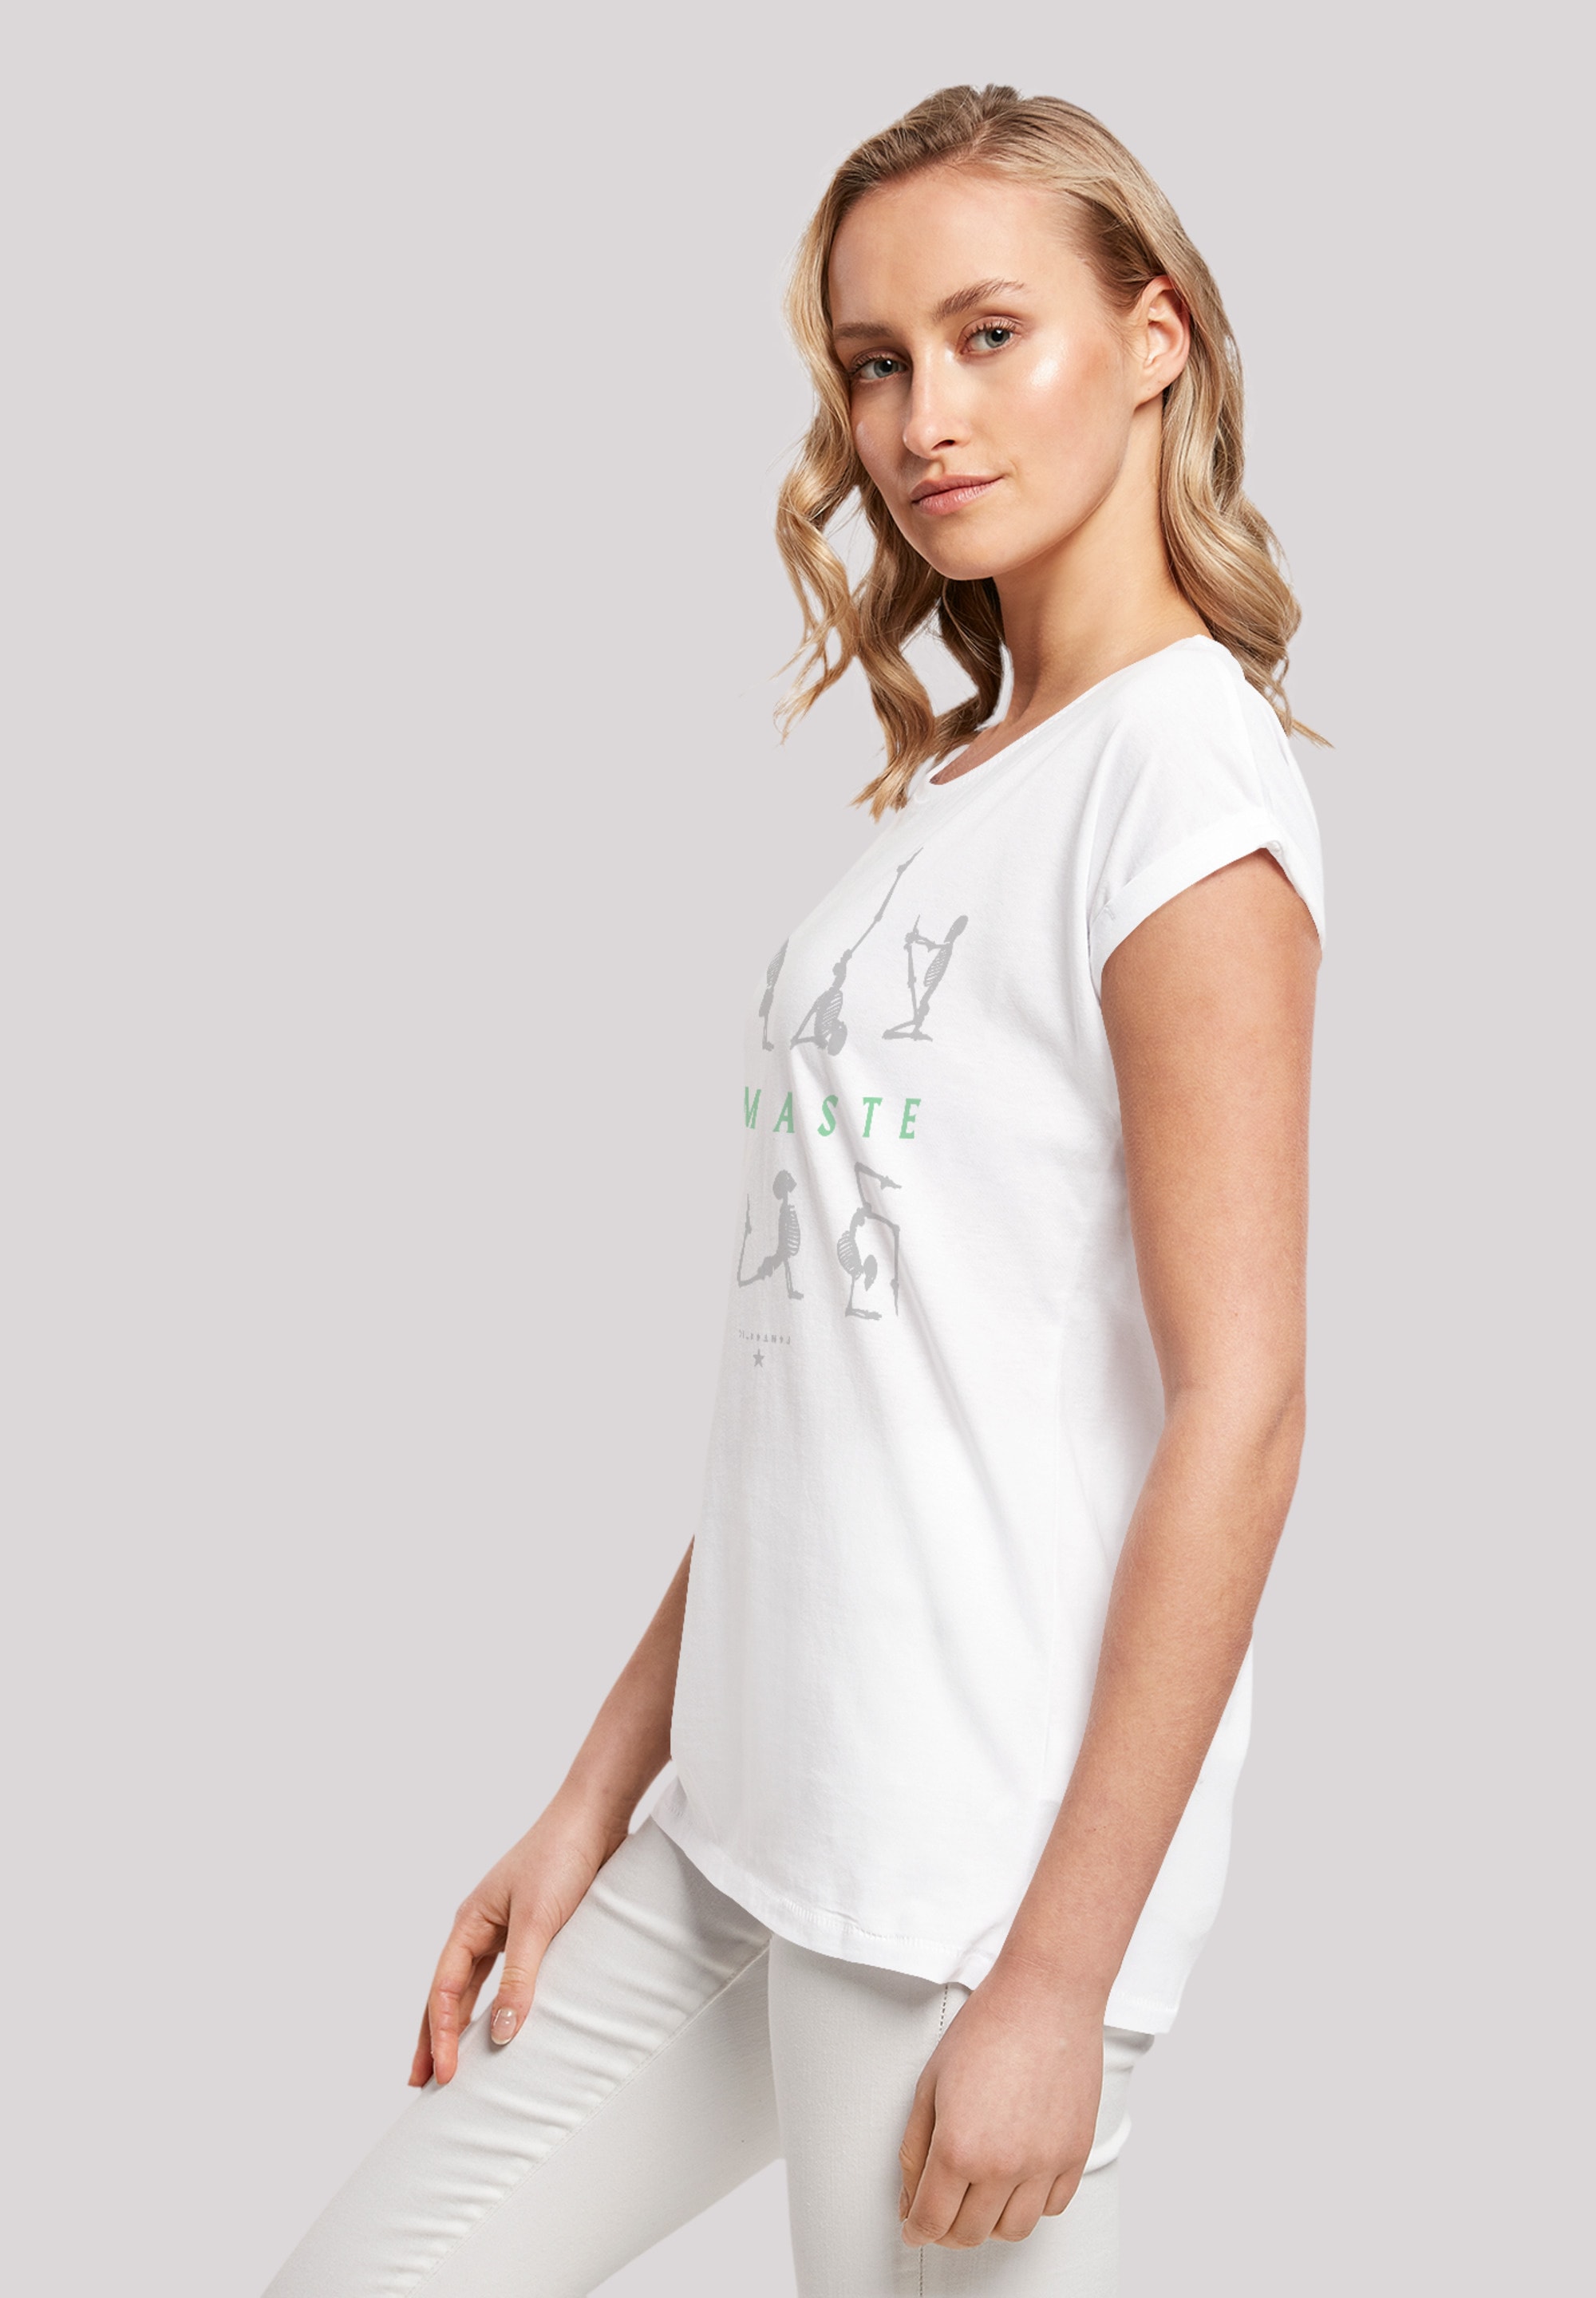 F4NT4STIC T-Shirt »Namaste Yoga Skelett Halloween«, Print online kaufen |  I\'m walking